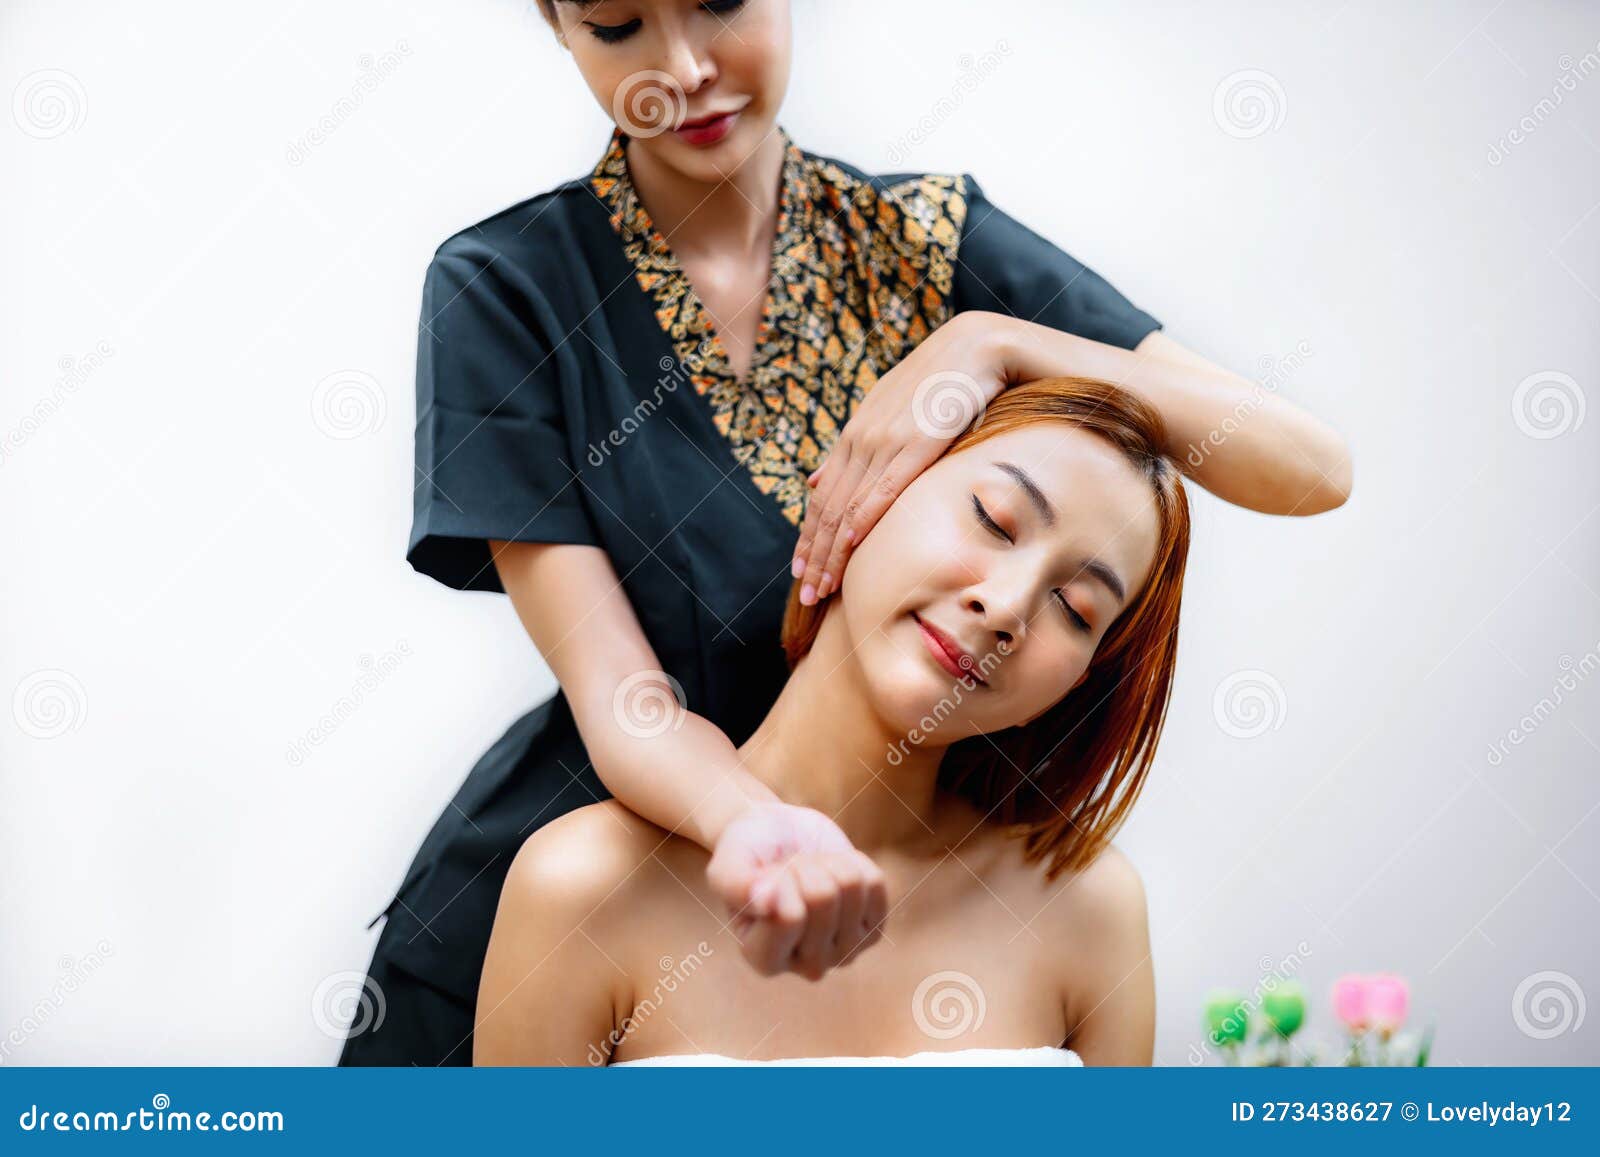 massagist tilting woman head while pressing elbow.thai massage in spa